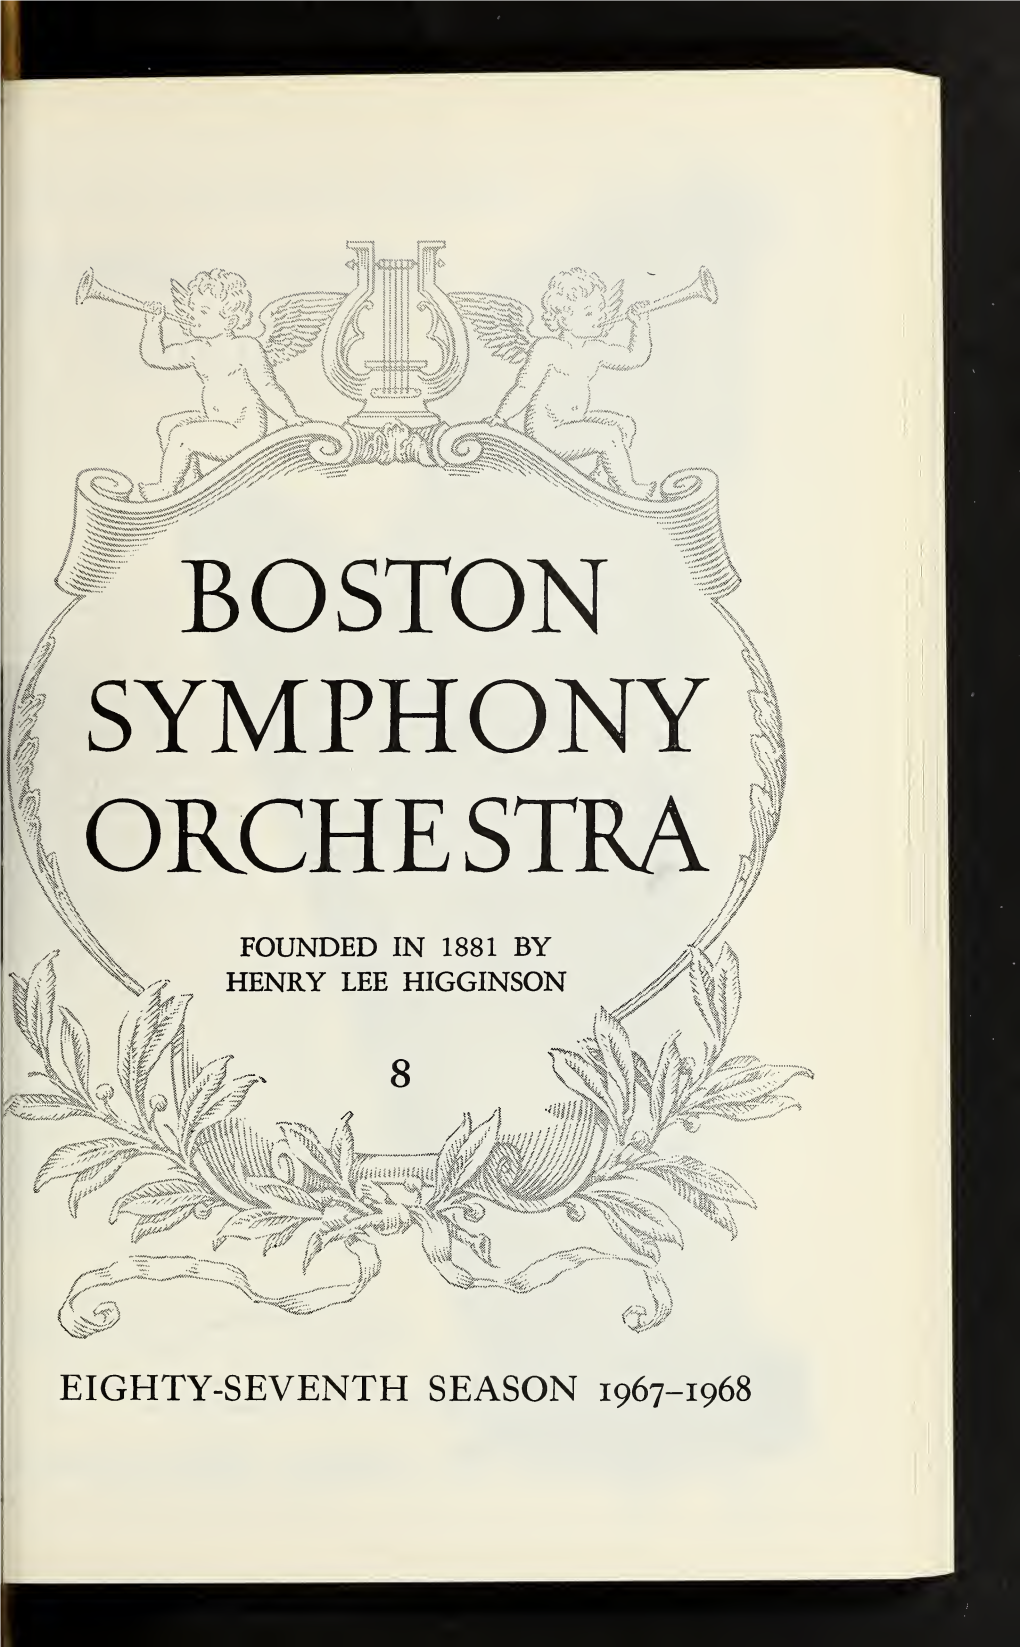 Boston Symphony Orchestra Concert Programs, Season 87, 1967-1968, Subscription